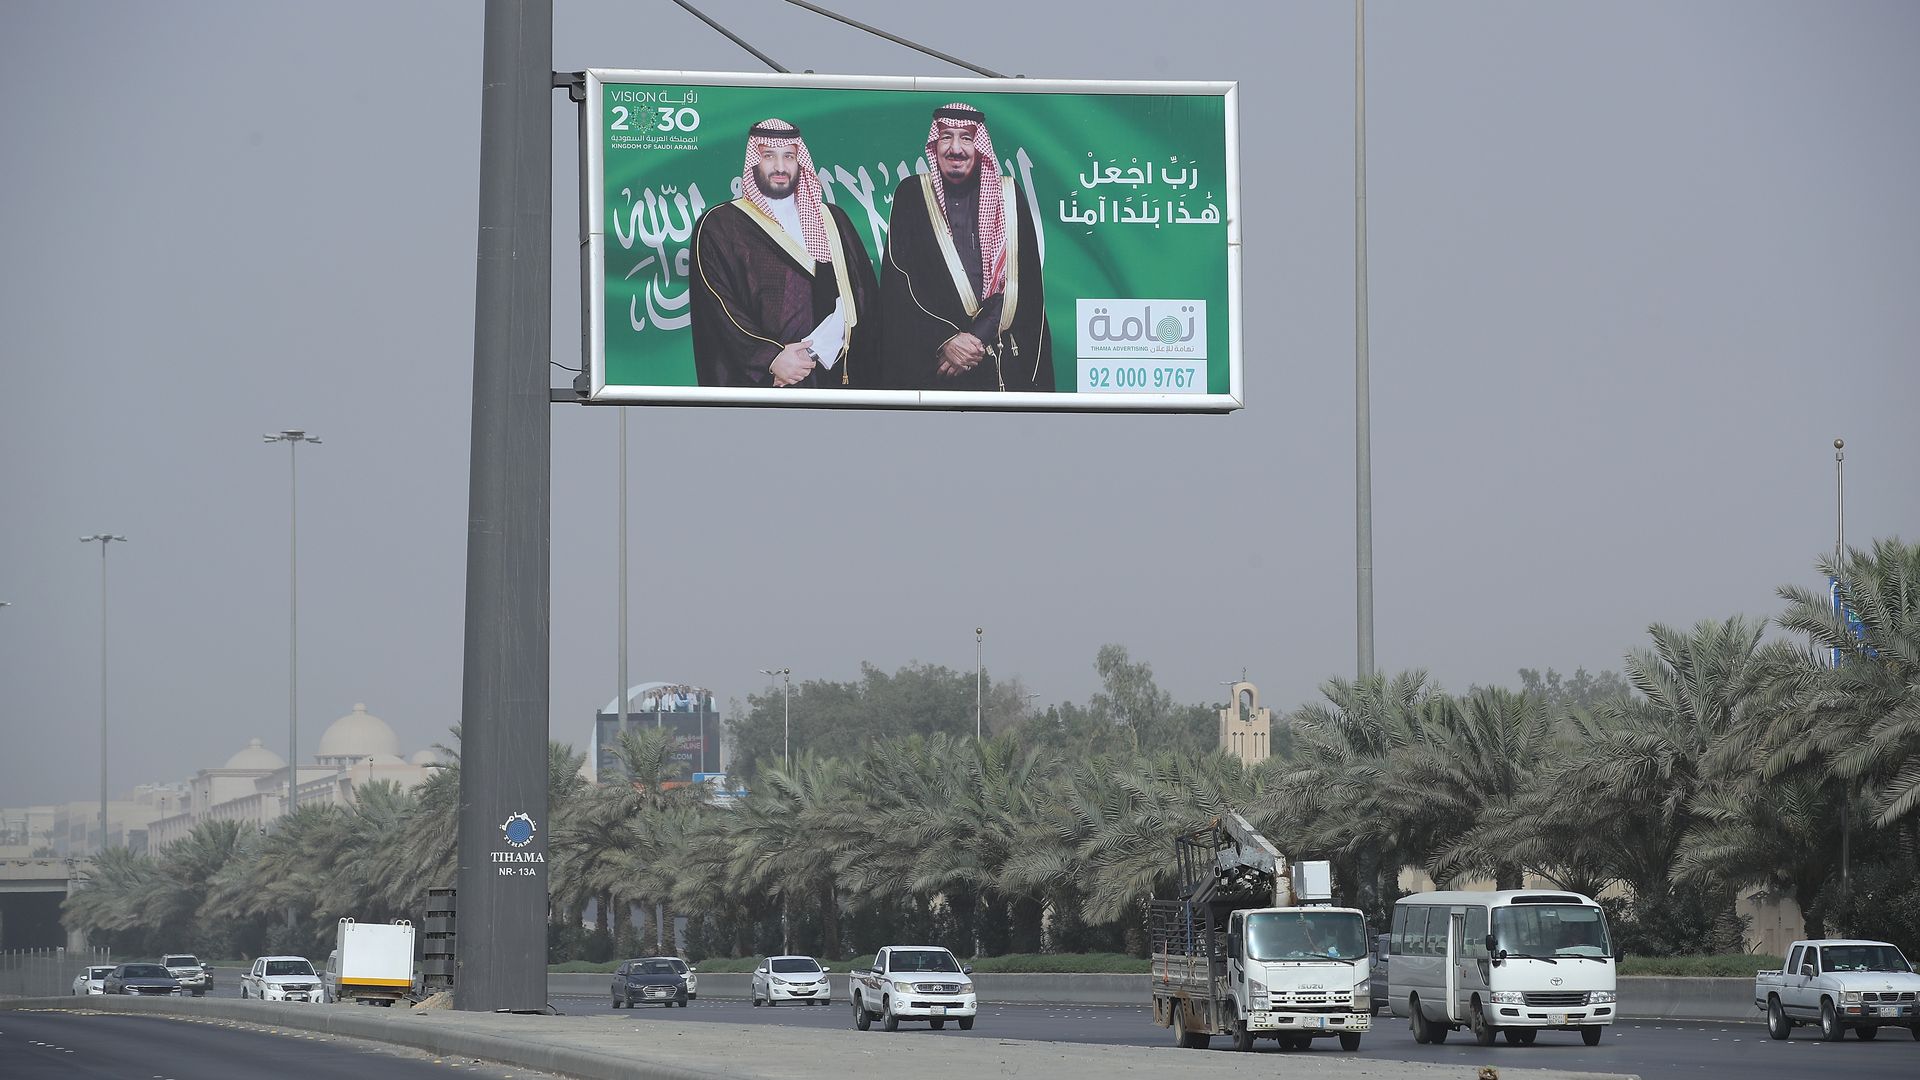  A billboard shows Saudi King Salman bin Abdulaziz (R) and Saudi Crown Prince Mohammad Bin Salman hanging over a highway on June 20, 2018 in Riyadh, Saudi Arabia. 